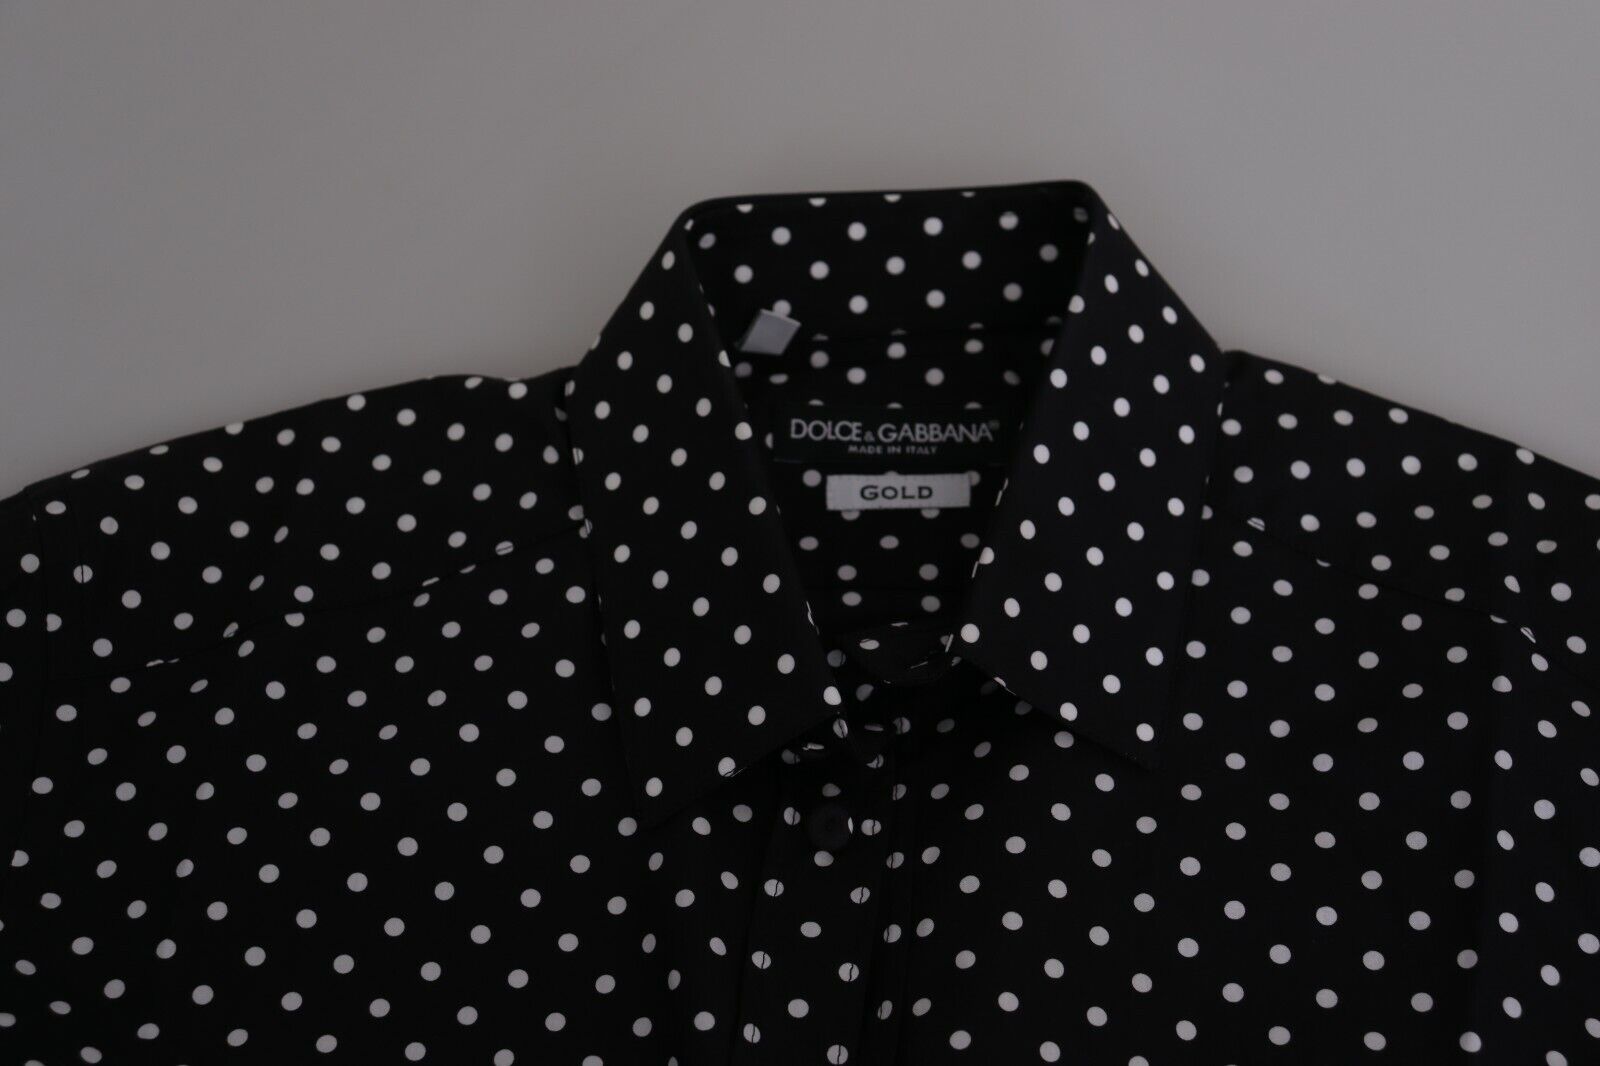 DOLCE & GABBANA Shirt GOLD Black White Polka Dots Casual Top 37/US14.5/XS  $1200